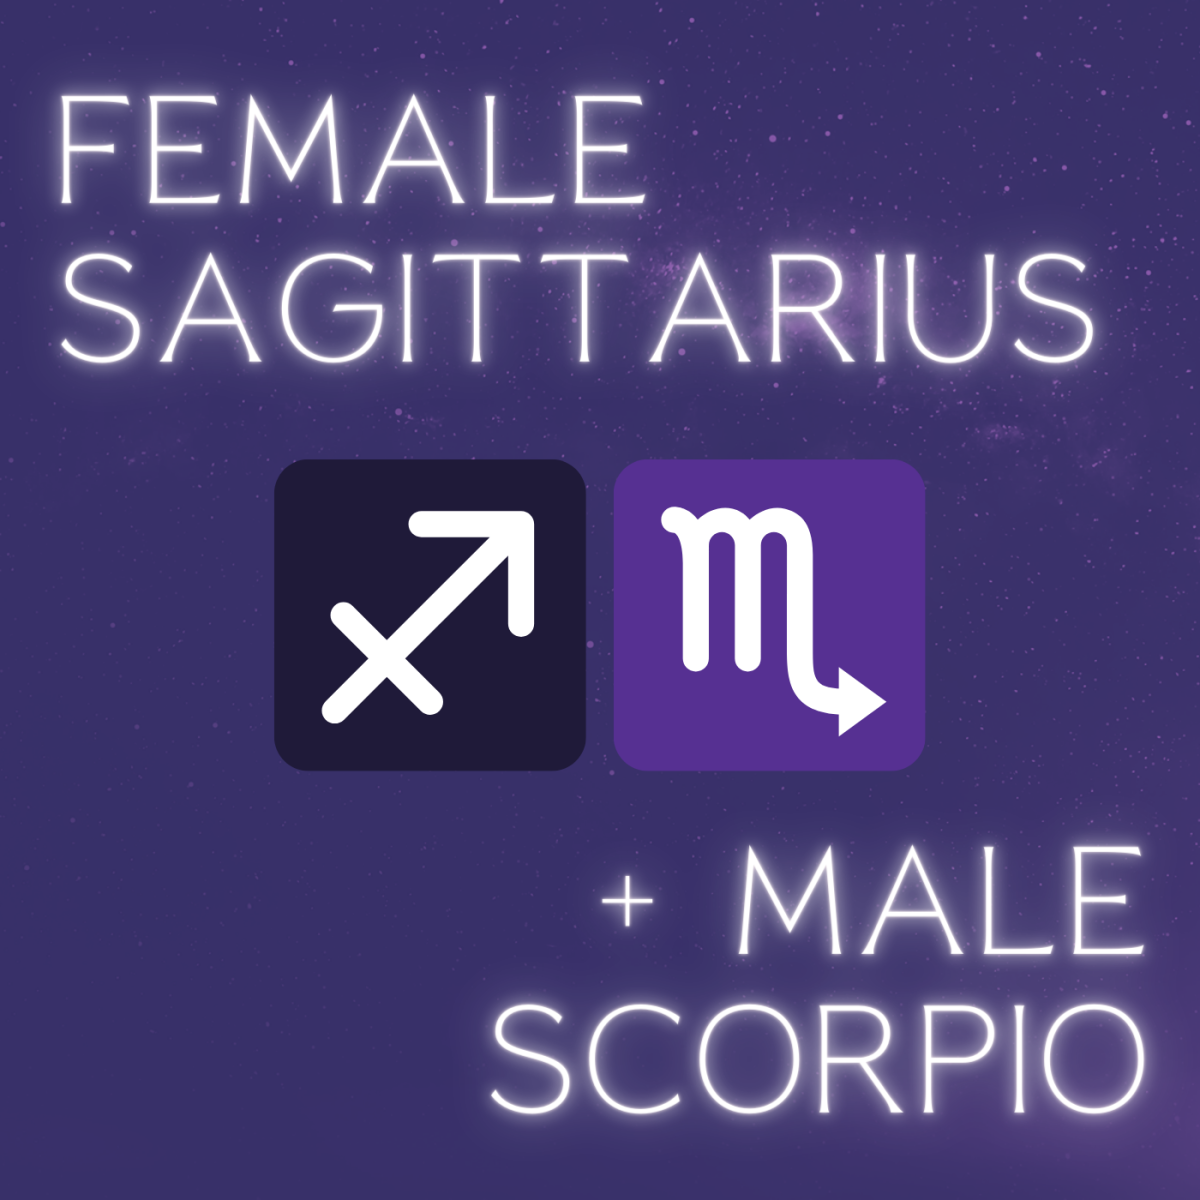 The Sagittarius + Scorpio match is a passionate one.